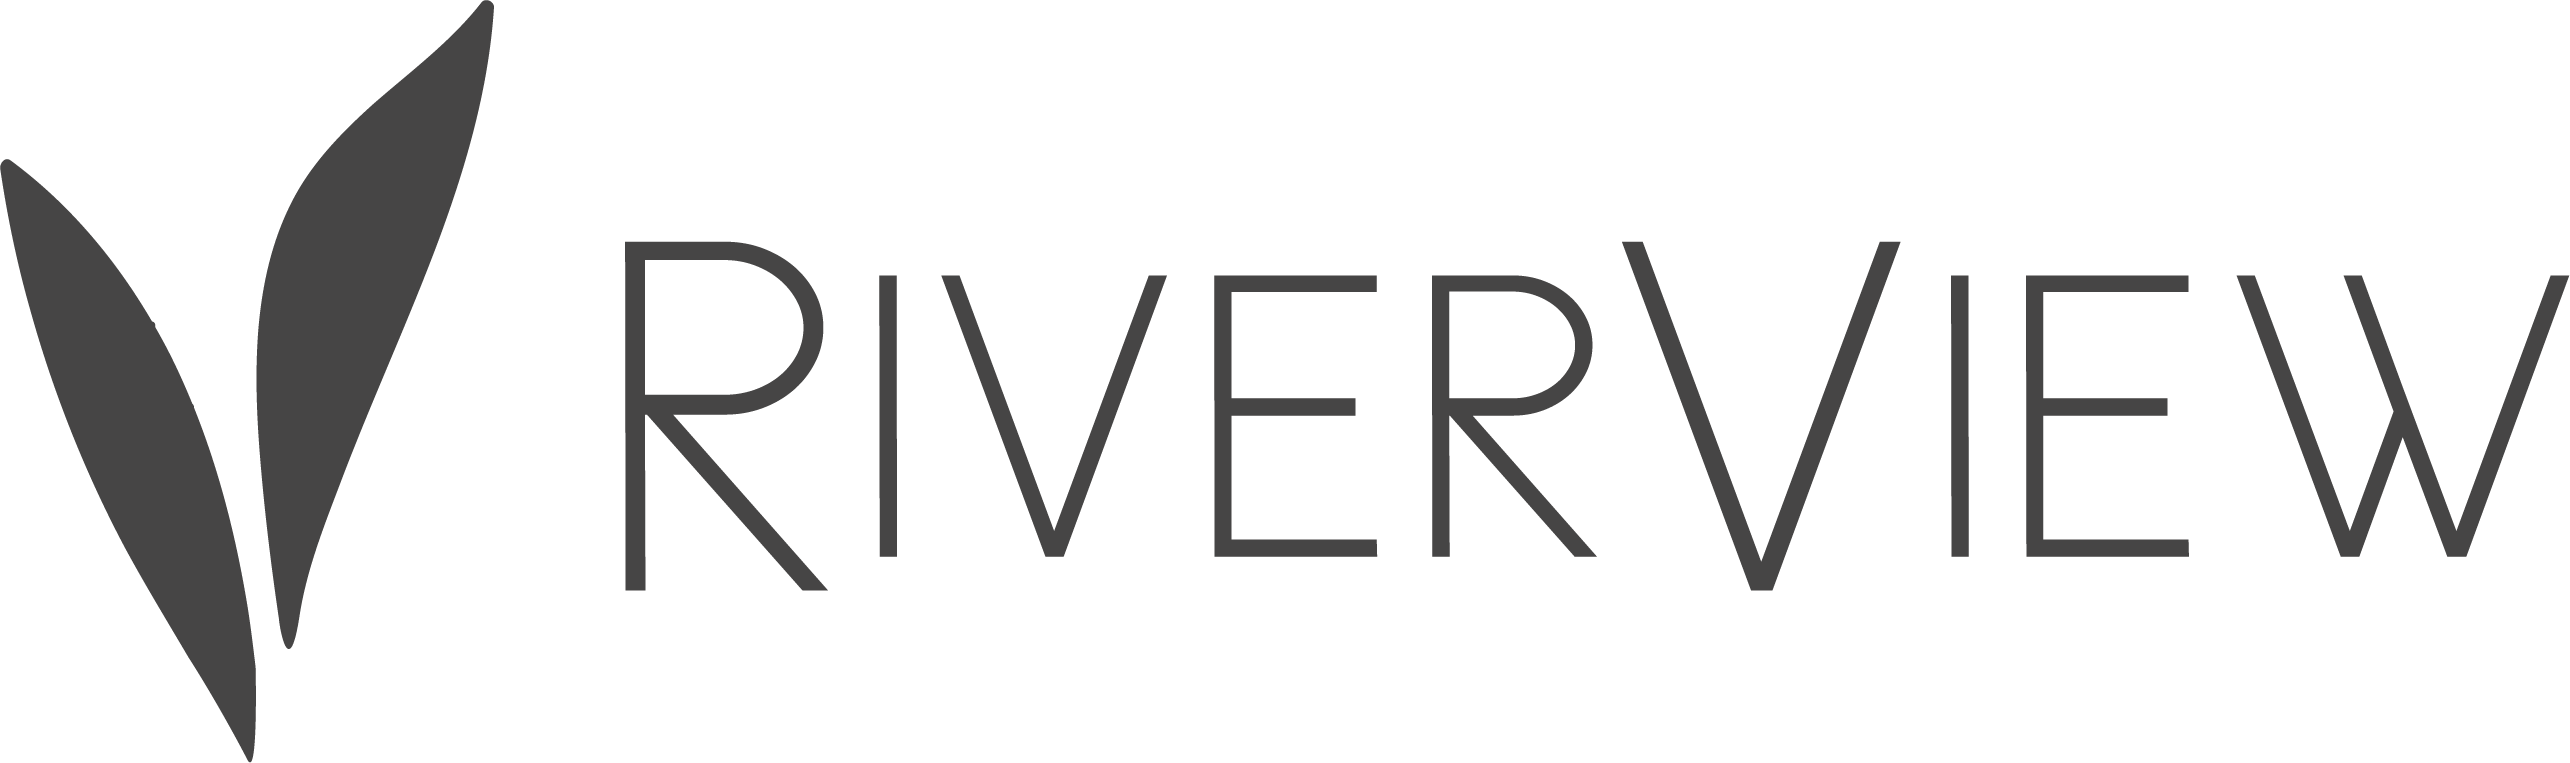 Valleyview_riverview-mono